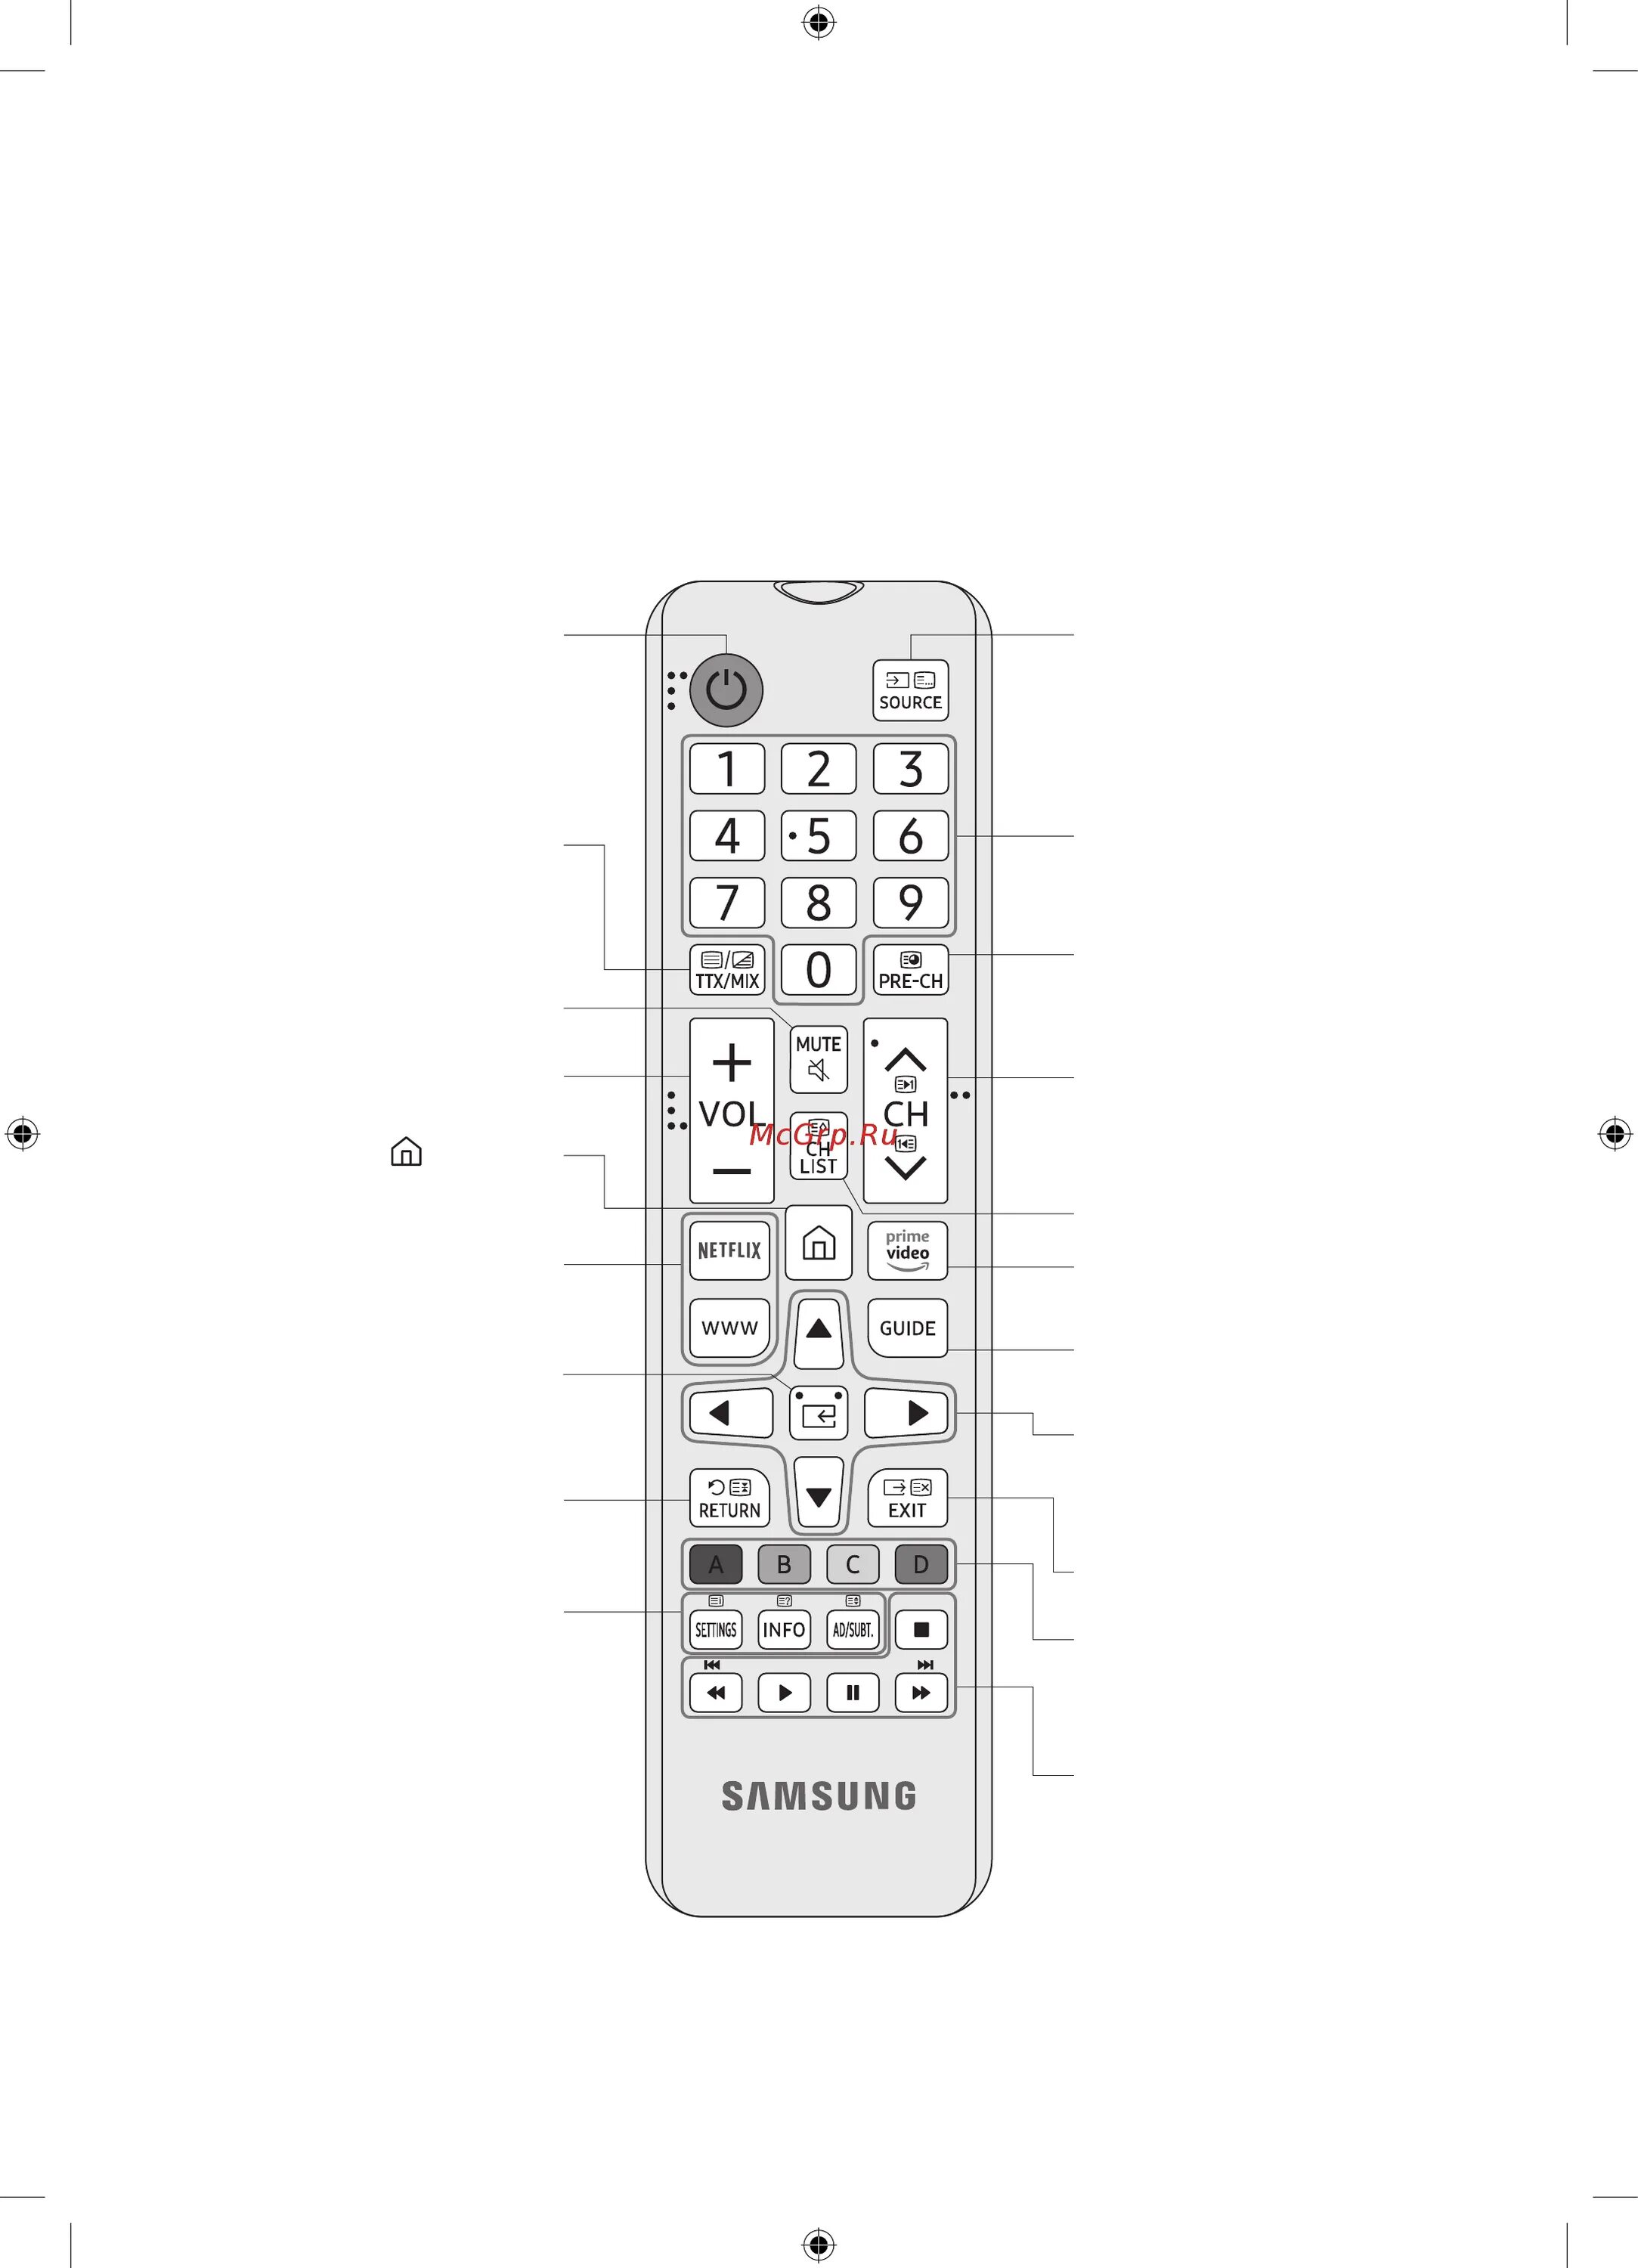 Кнопка ду на телевизоре. Назначение кнопок на пульте телевизора самсунг. Пульт для телевизора Samsung кнопки управления. Кнопки пульта телевизора самсунг. Пульт для телевизора самсунг кнопок инструкция.